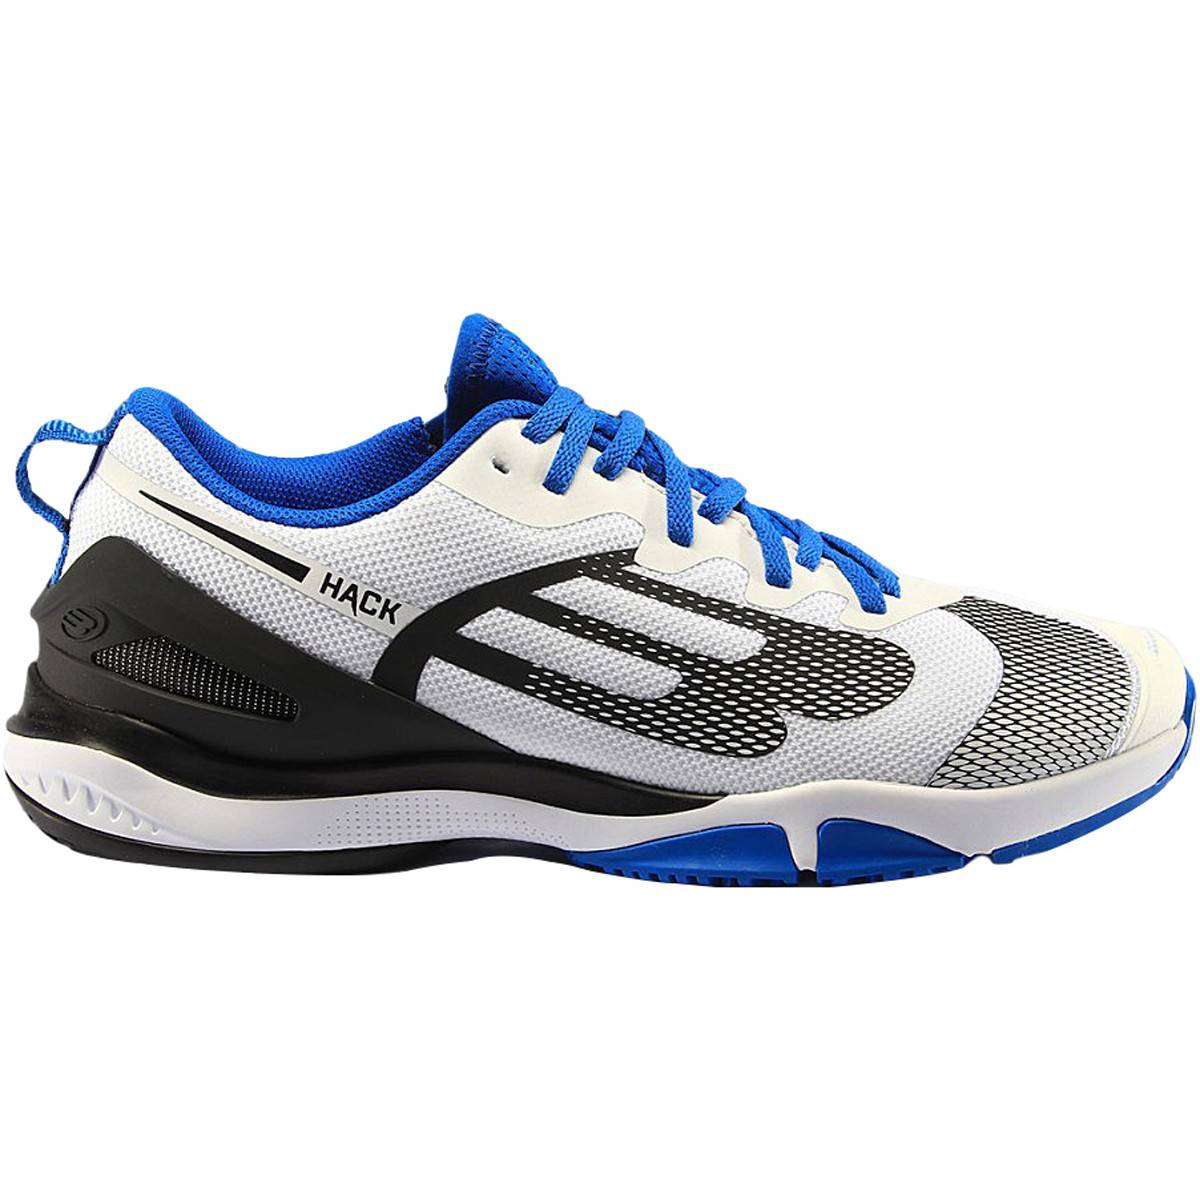 BULLPADEL HACK HYBRID FLY PADEL SHOES - Men's - Shoes | Tennispro